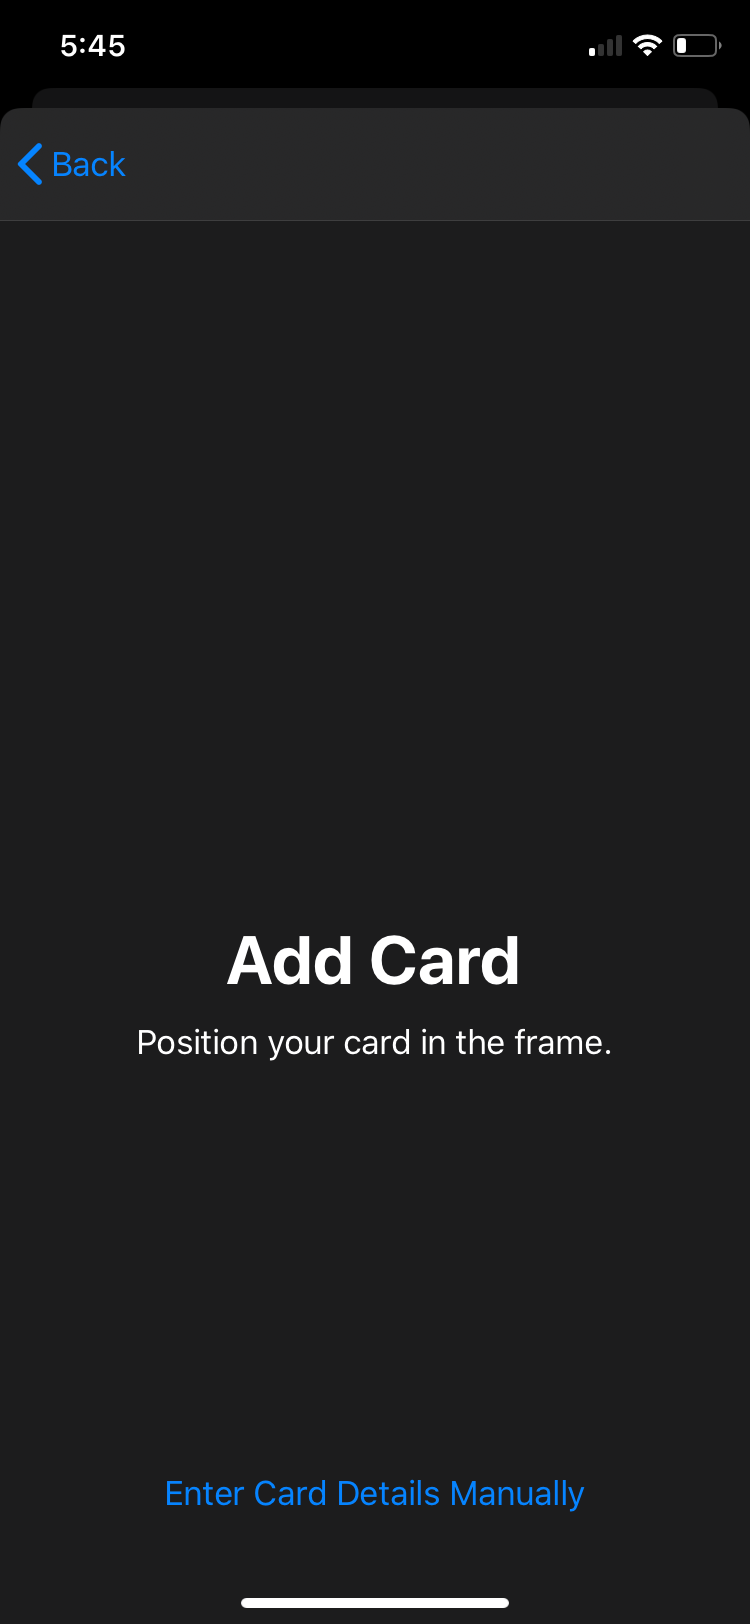 Option to enter card details or scan card.